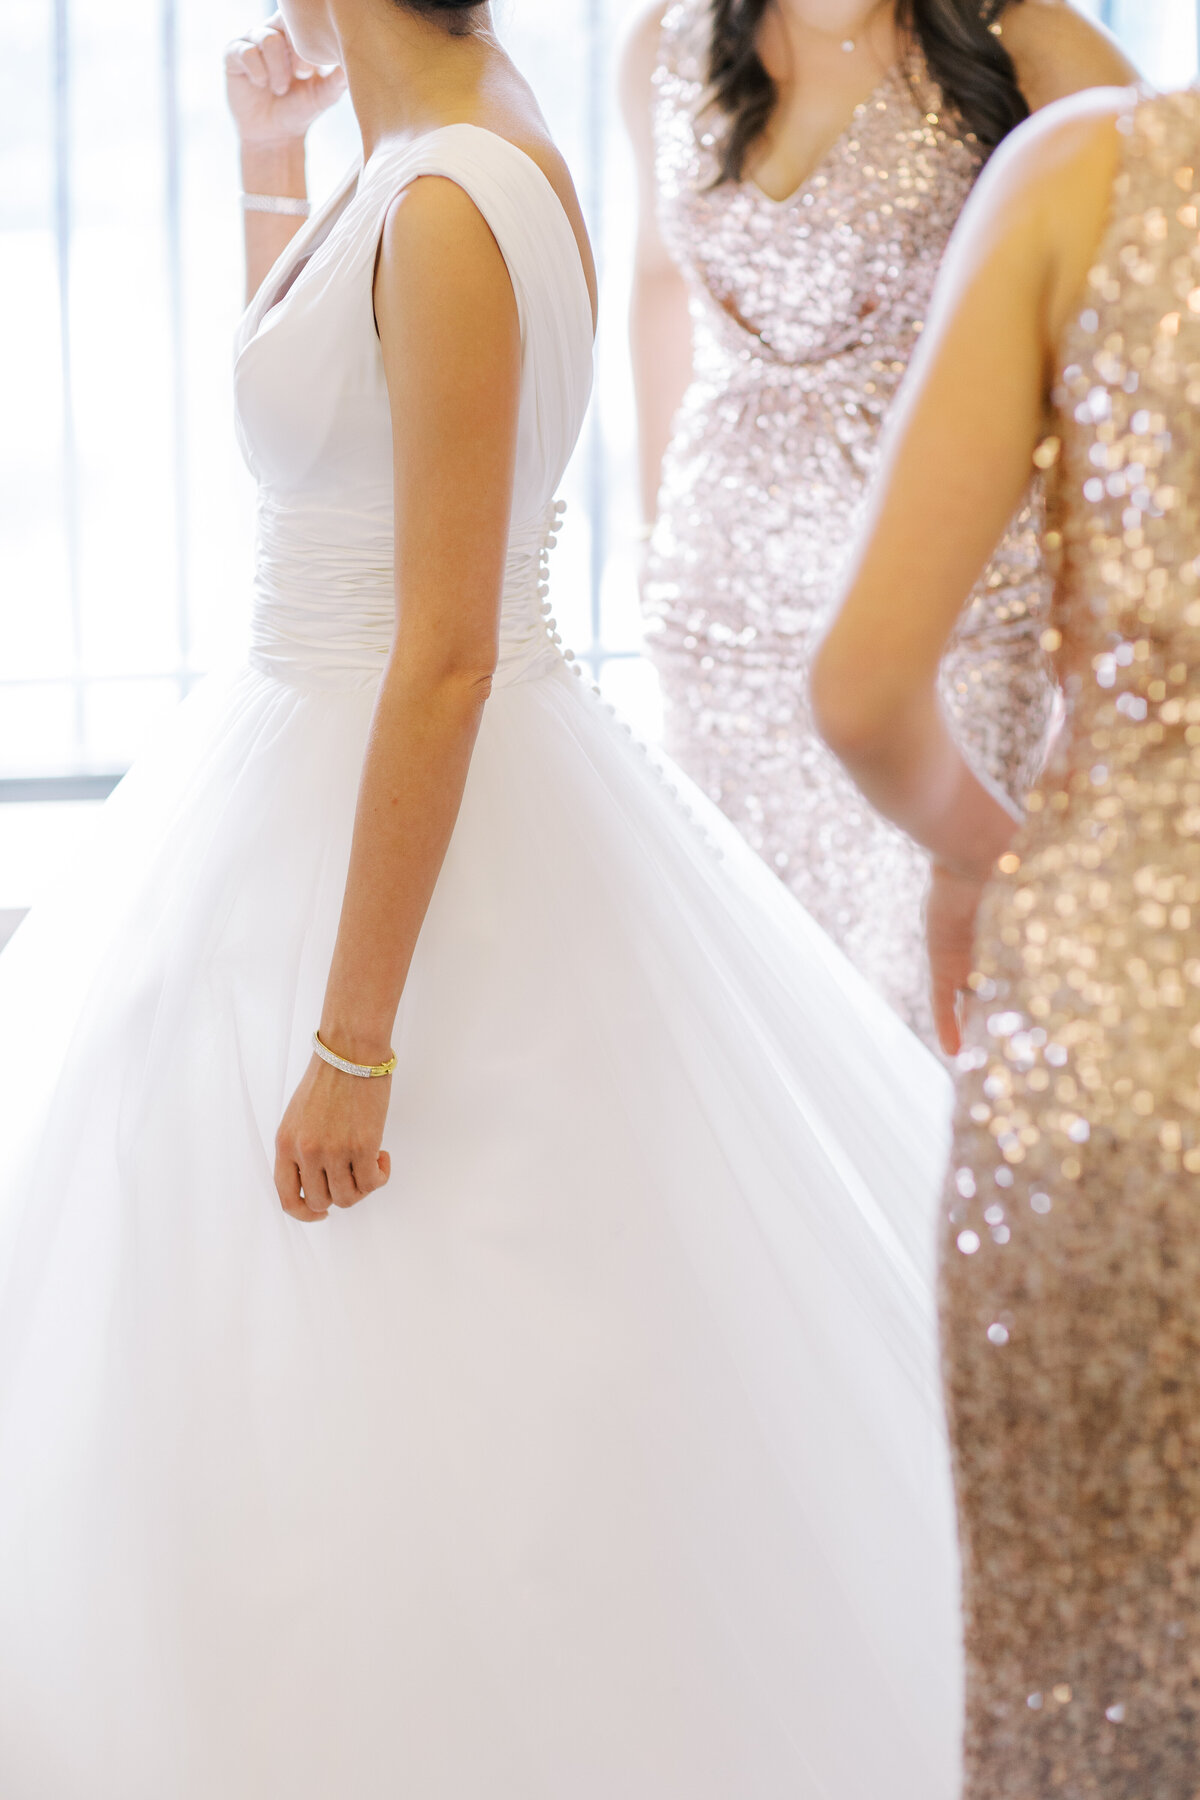 Bay Area Luxury Wedding Photographer - Carolina Herrera Bridal Gown-15